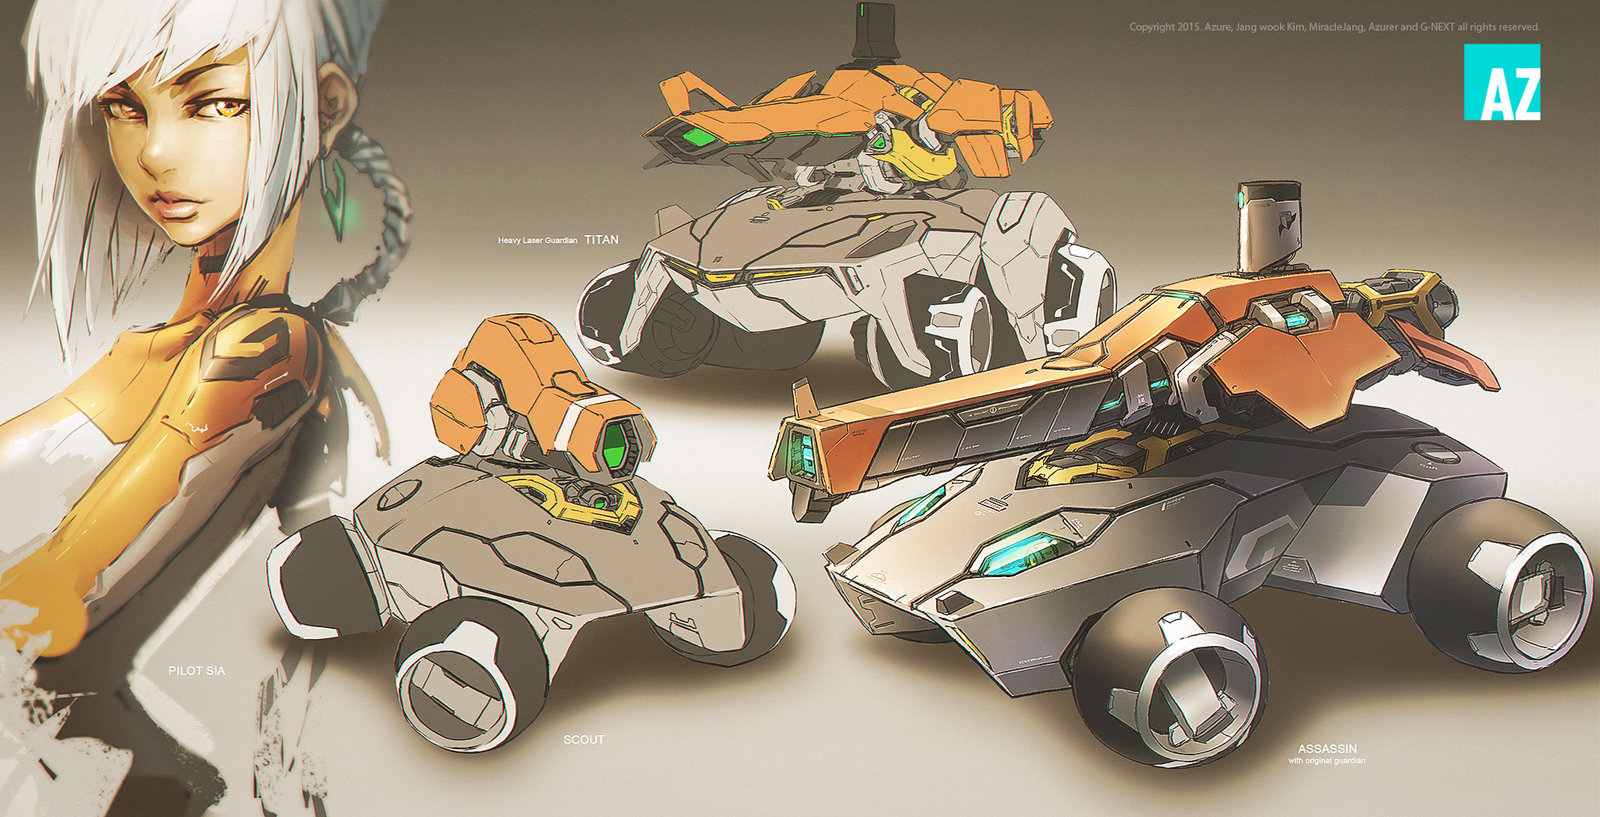 Future battle vehicles